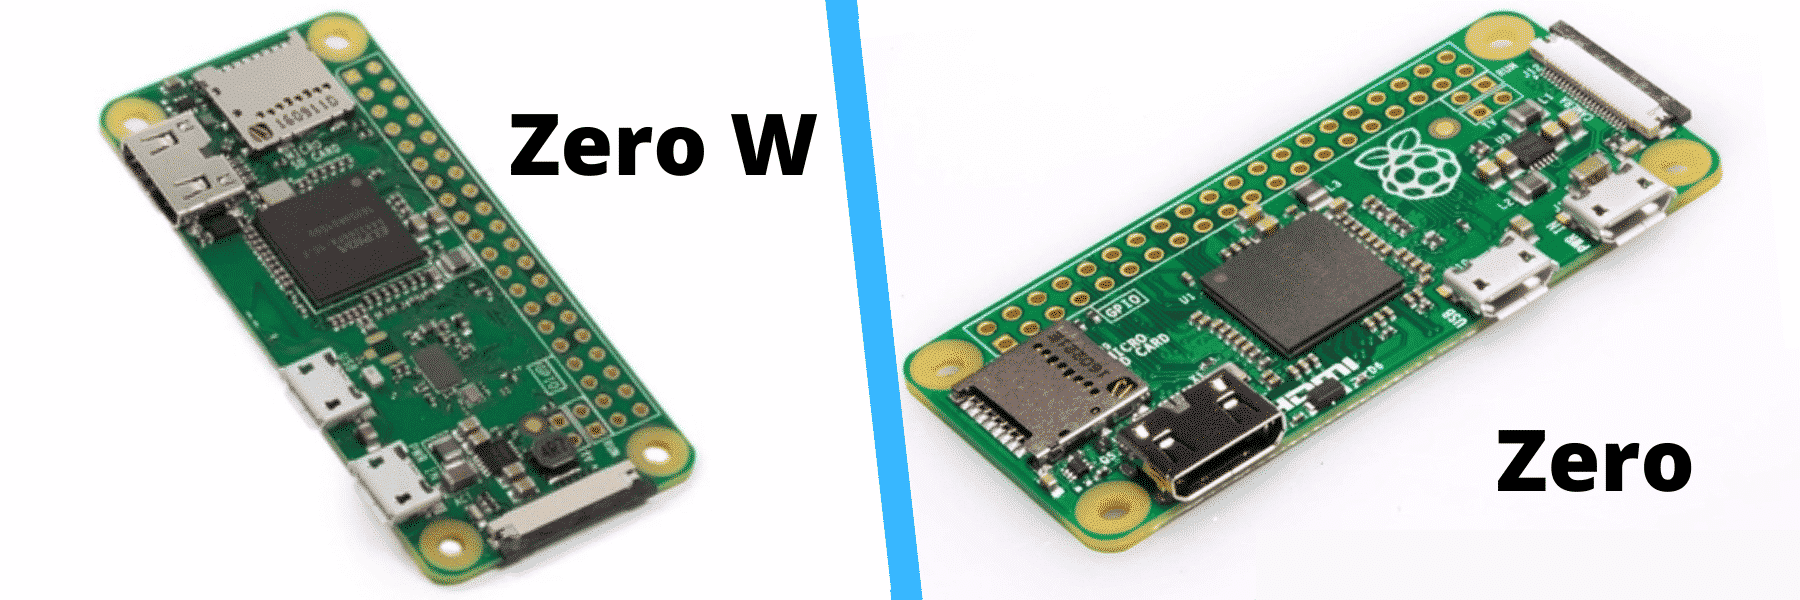 Verschil Raspberry Pi Zero / Zero W